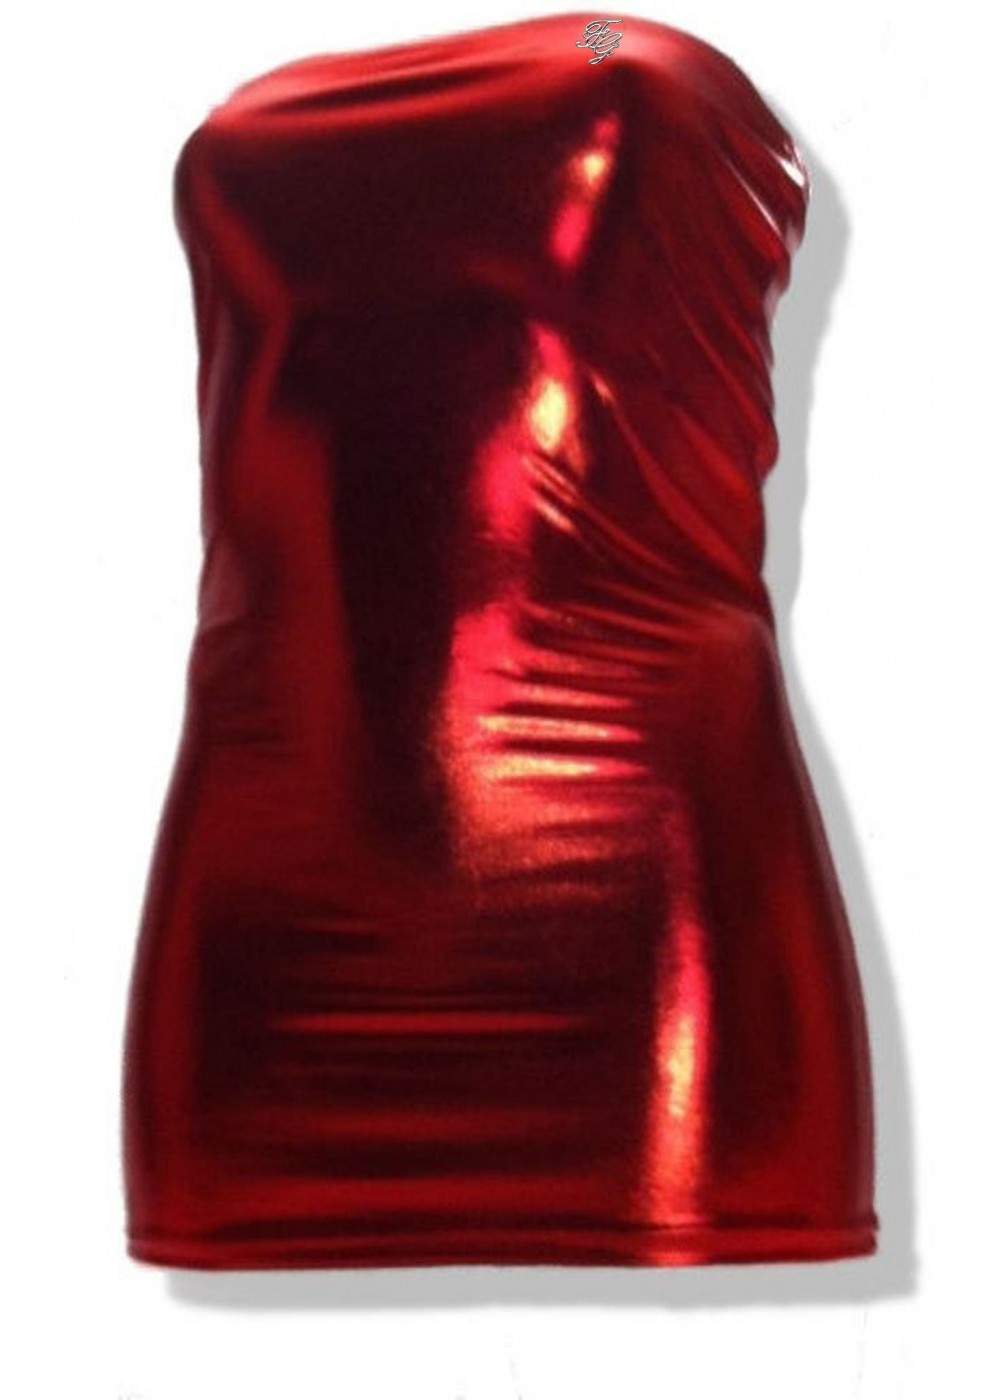 Hammer Wetlook Gogo Bandeau Dress Red Sizes 44 - 52 Many Lengths 30... - 